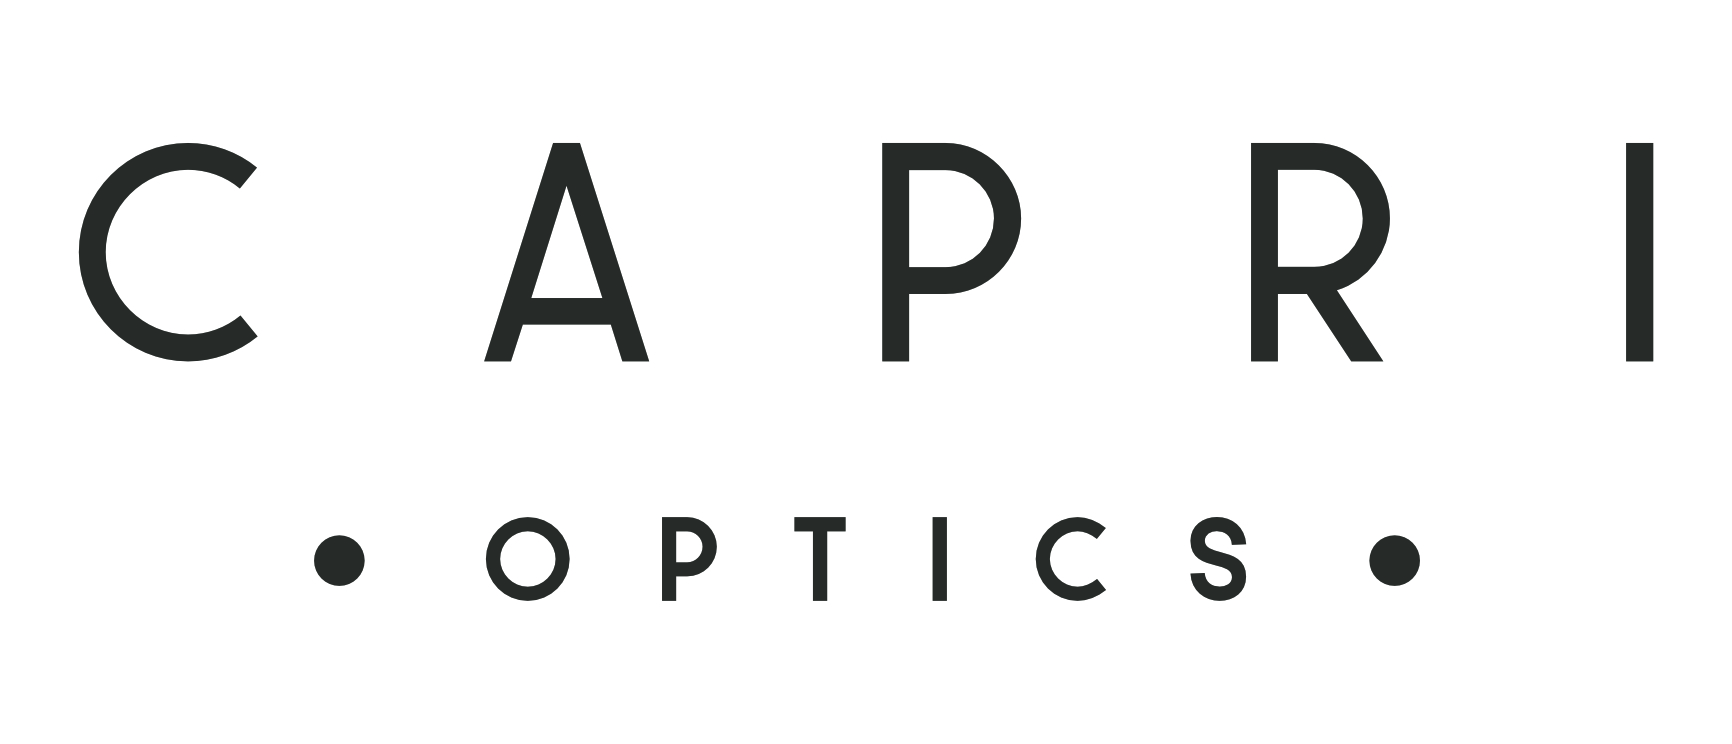 https://0201.nccdn.net/4_2/000/000/079/c81/Capri_Optics_Logo_1_black.jpg